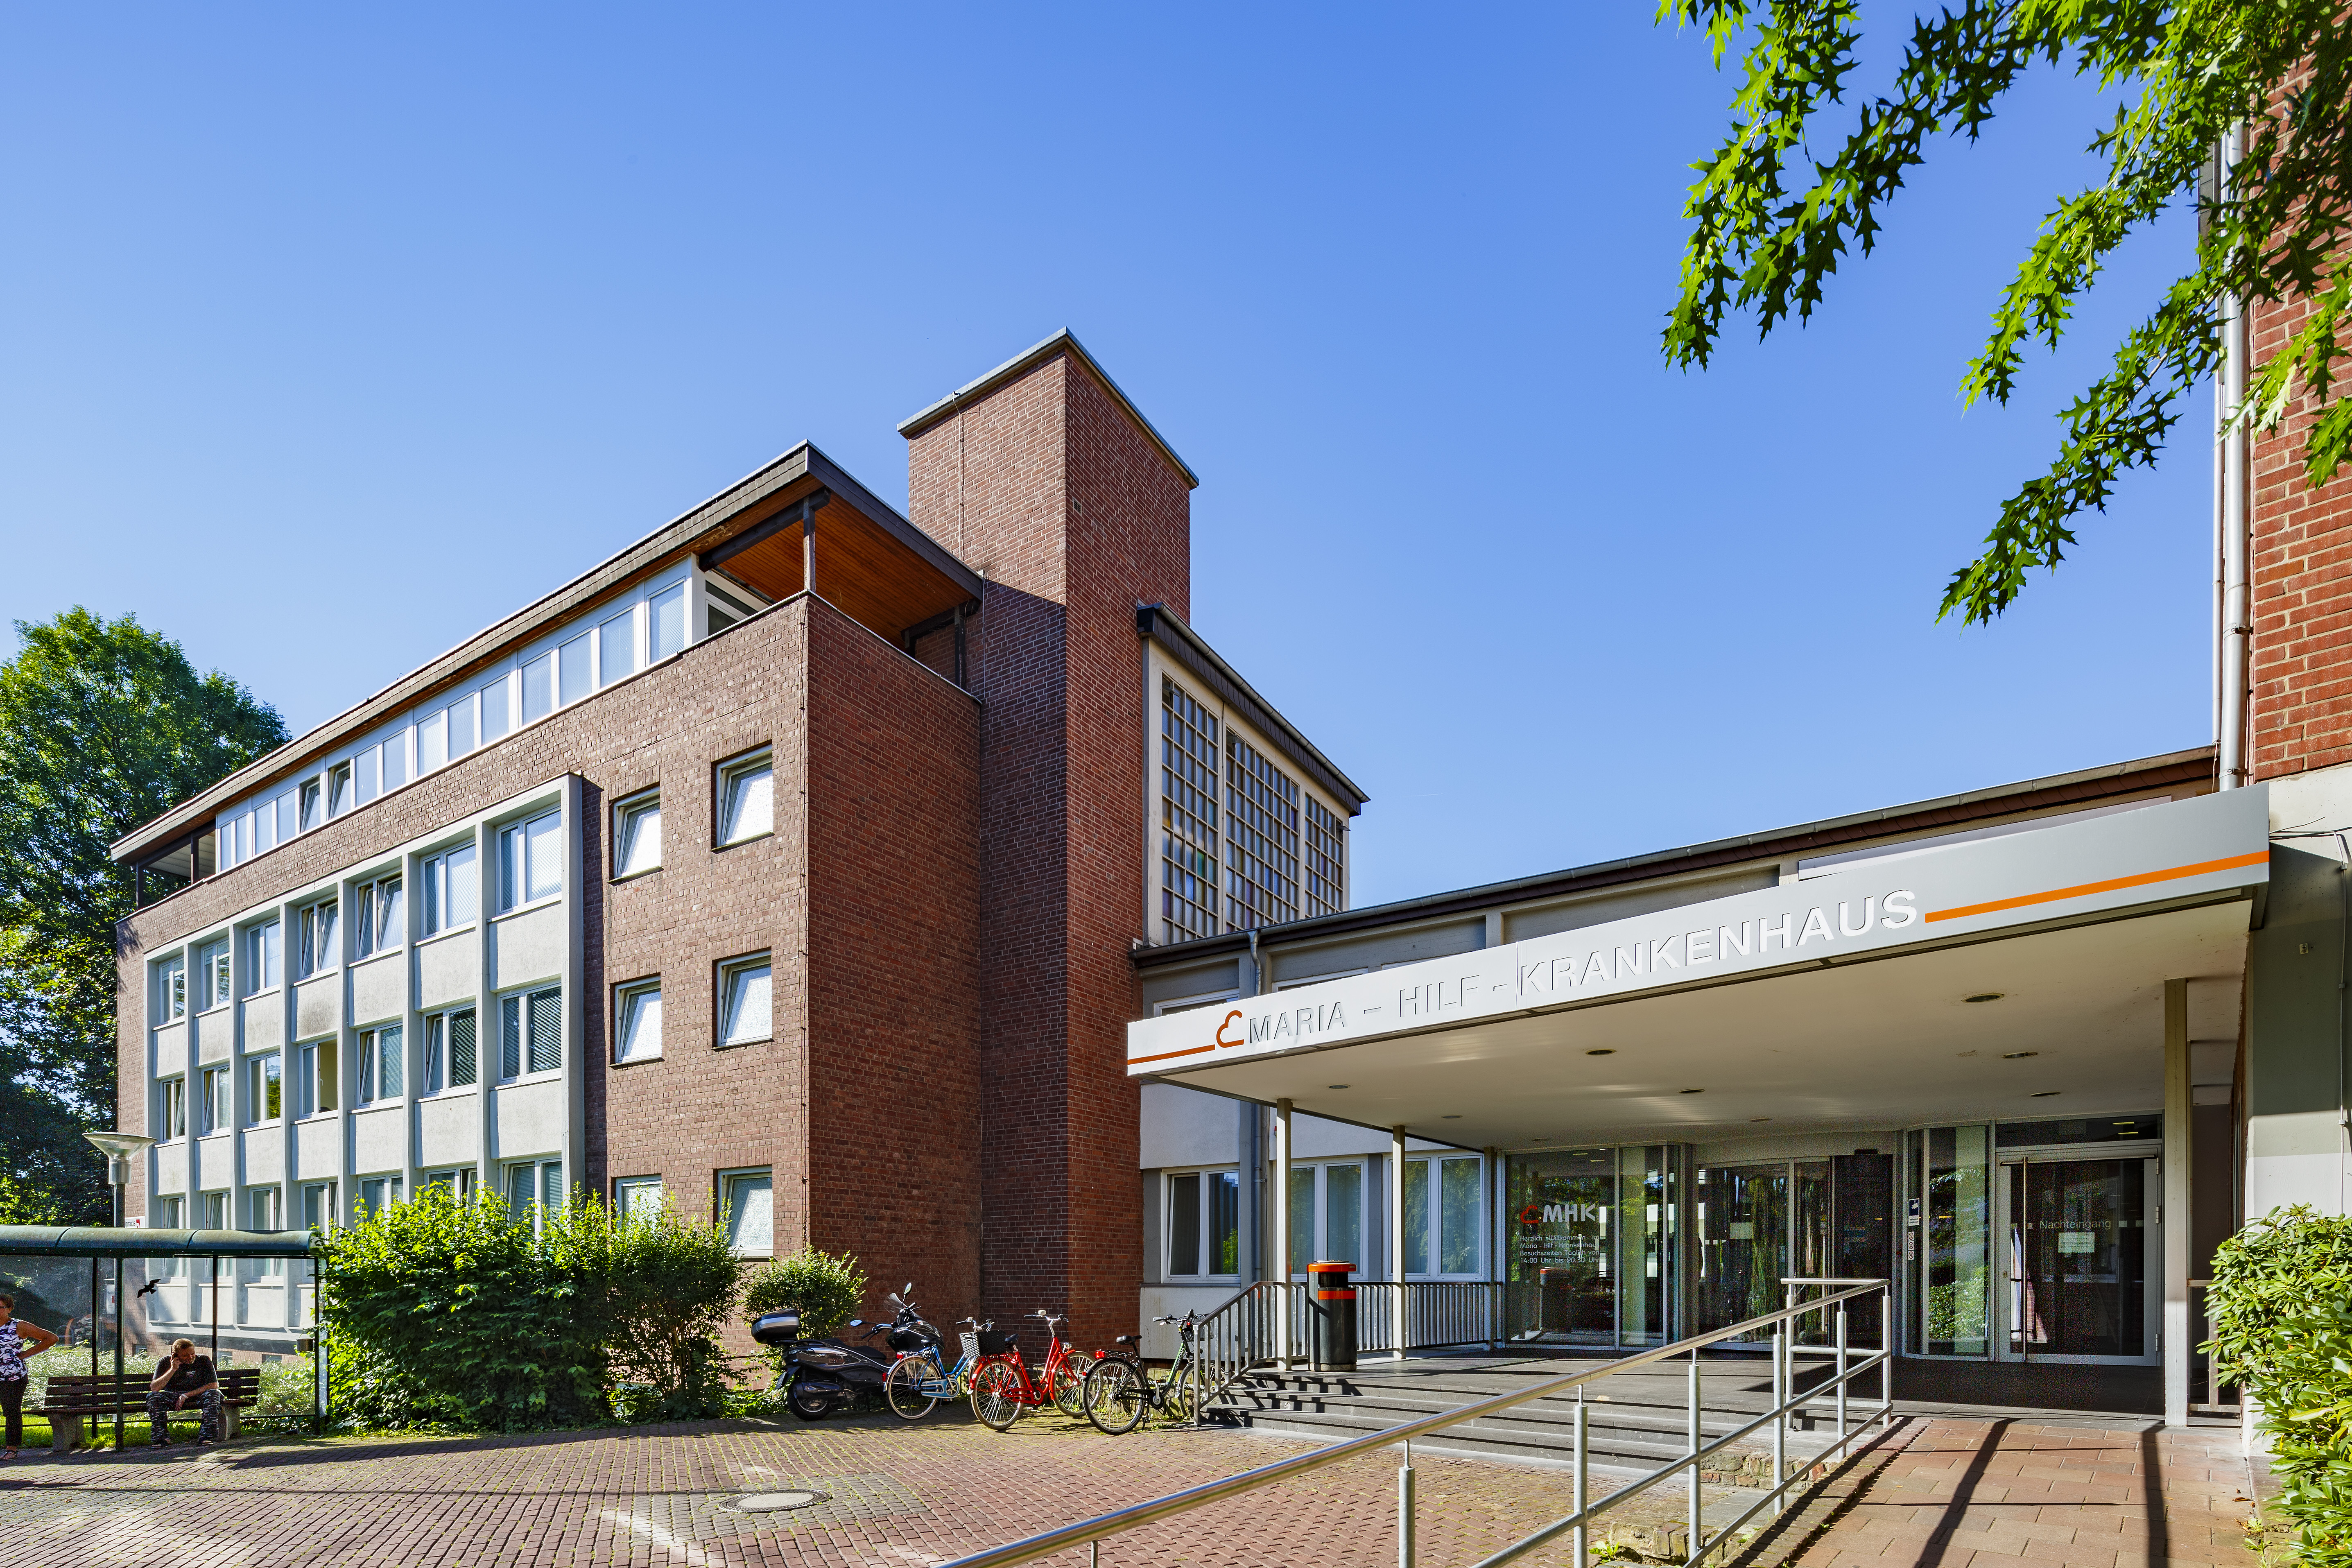 Maria-Hilf-Krankenhaus in Bergheim im Rhein-Erft-Kreis